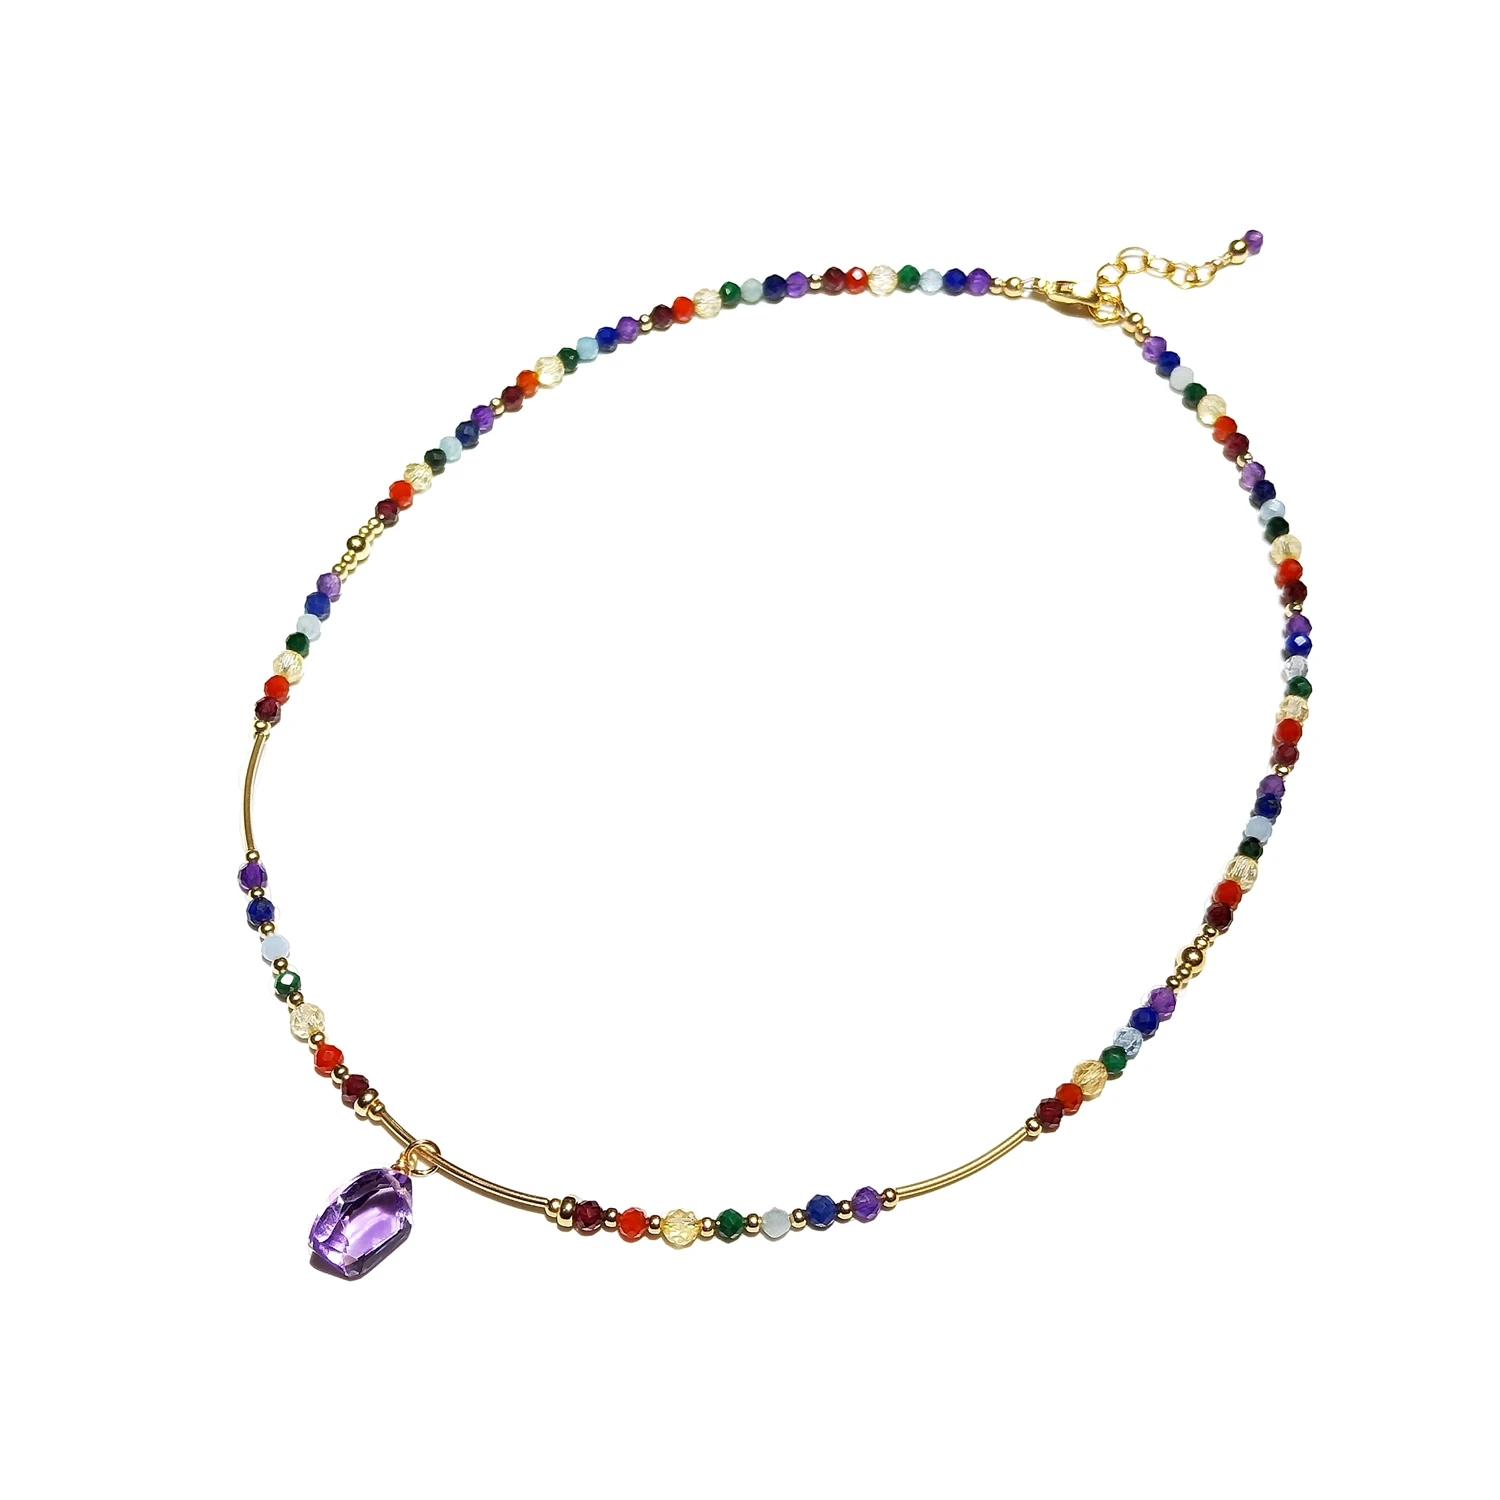 Lii Ji 7 Chakras Healing Stone Natural Multi Gemstone 14K Gold Filled Handmade Necklace Gold Jewelry For Women Men Children Gift